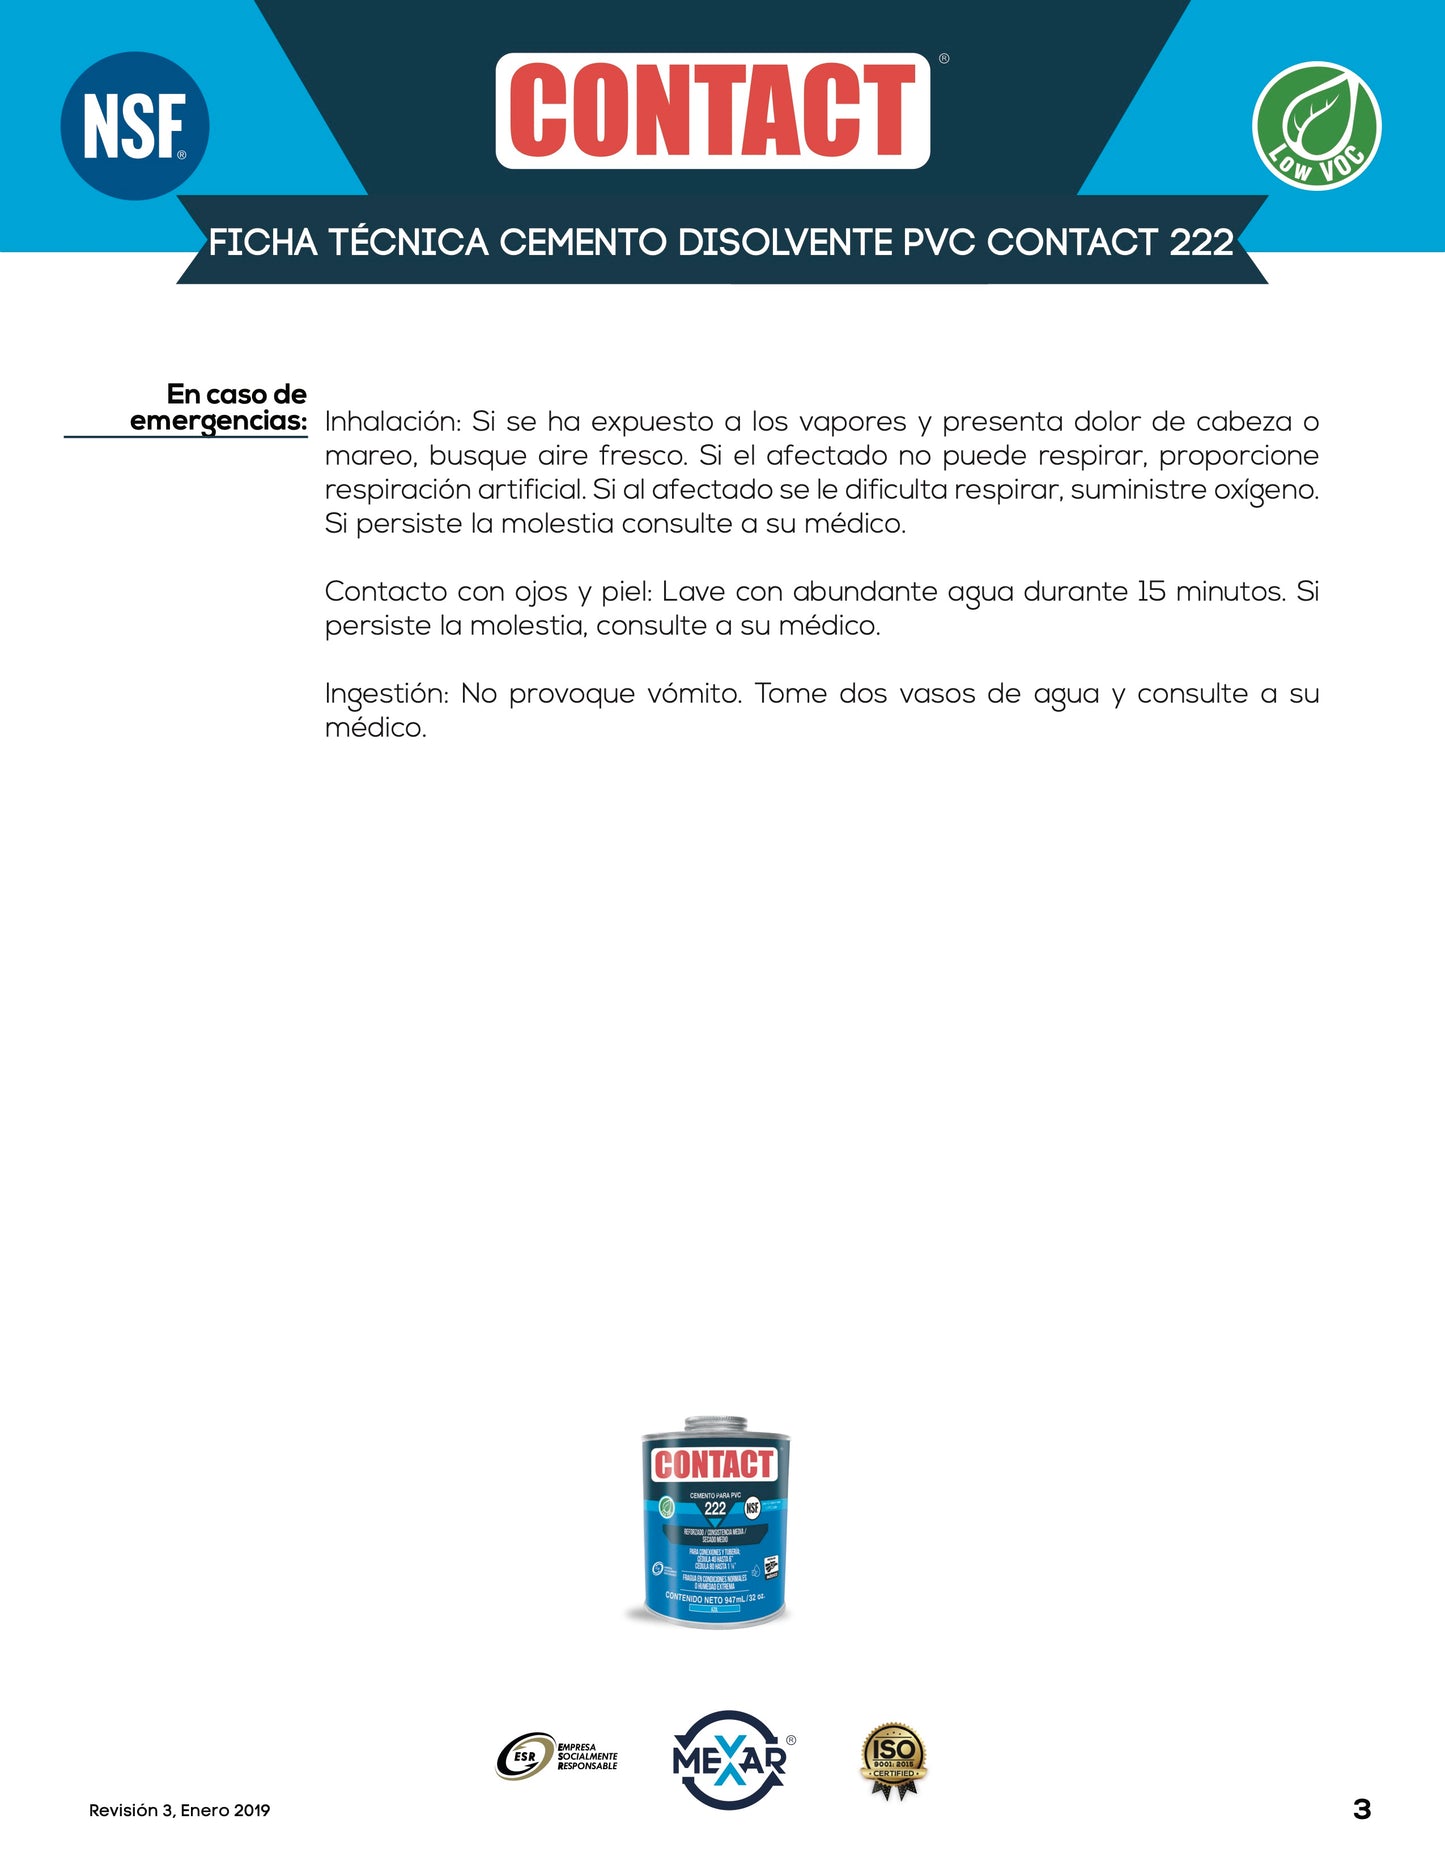 Pegamento Para PVC CONTACT 222 1/2 Litro Condiciones Húmedas